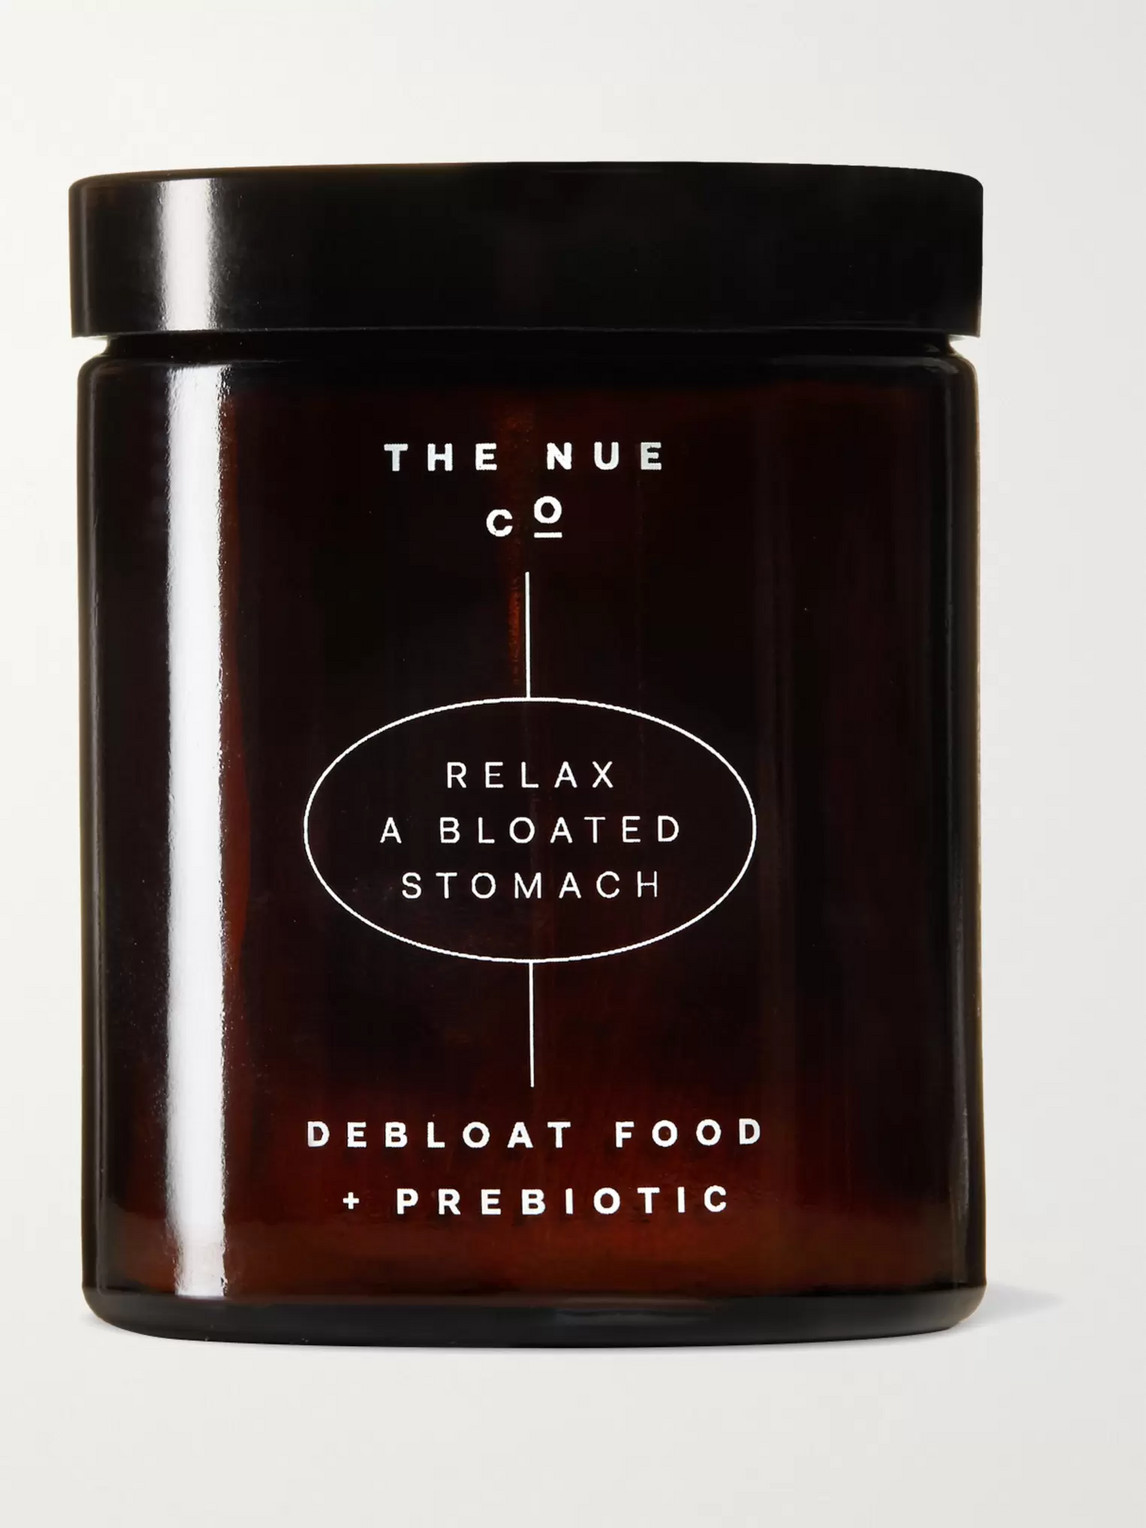 The Nue Co Debloat Food Prebiotic Supplement, 100g In Colourless